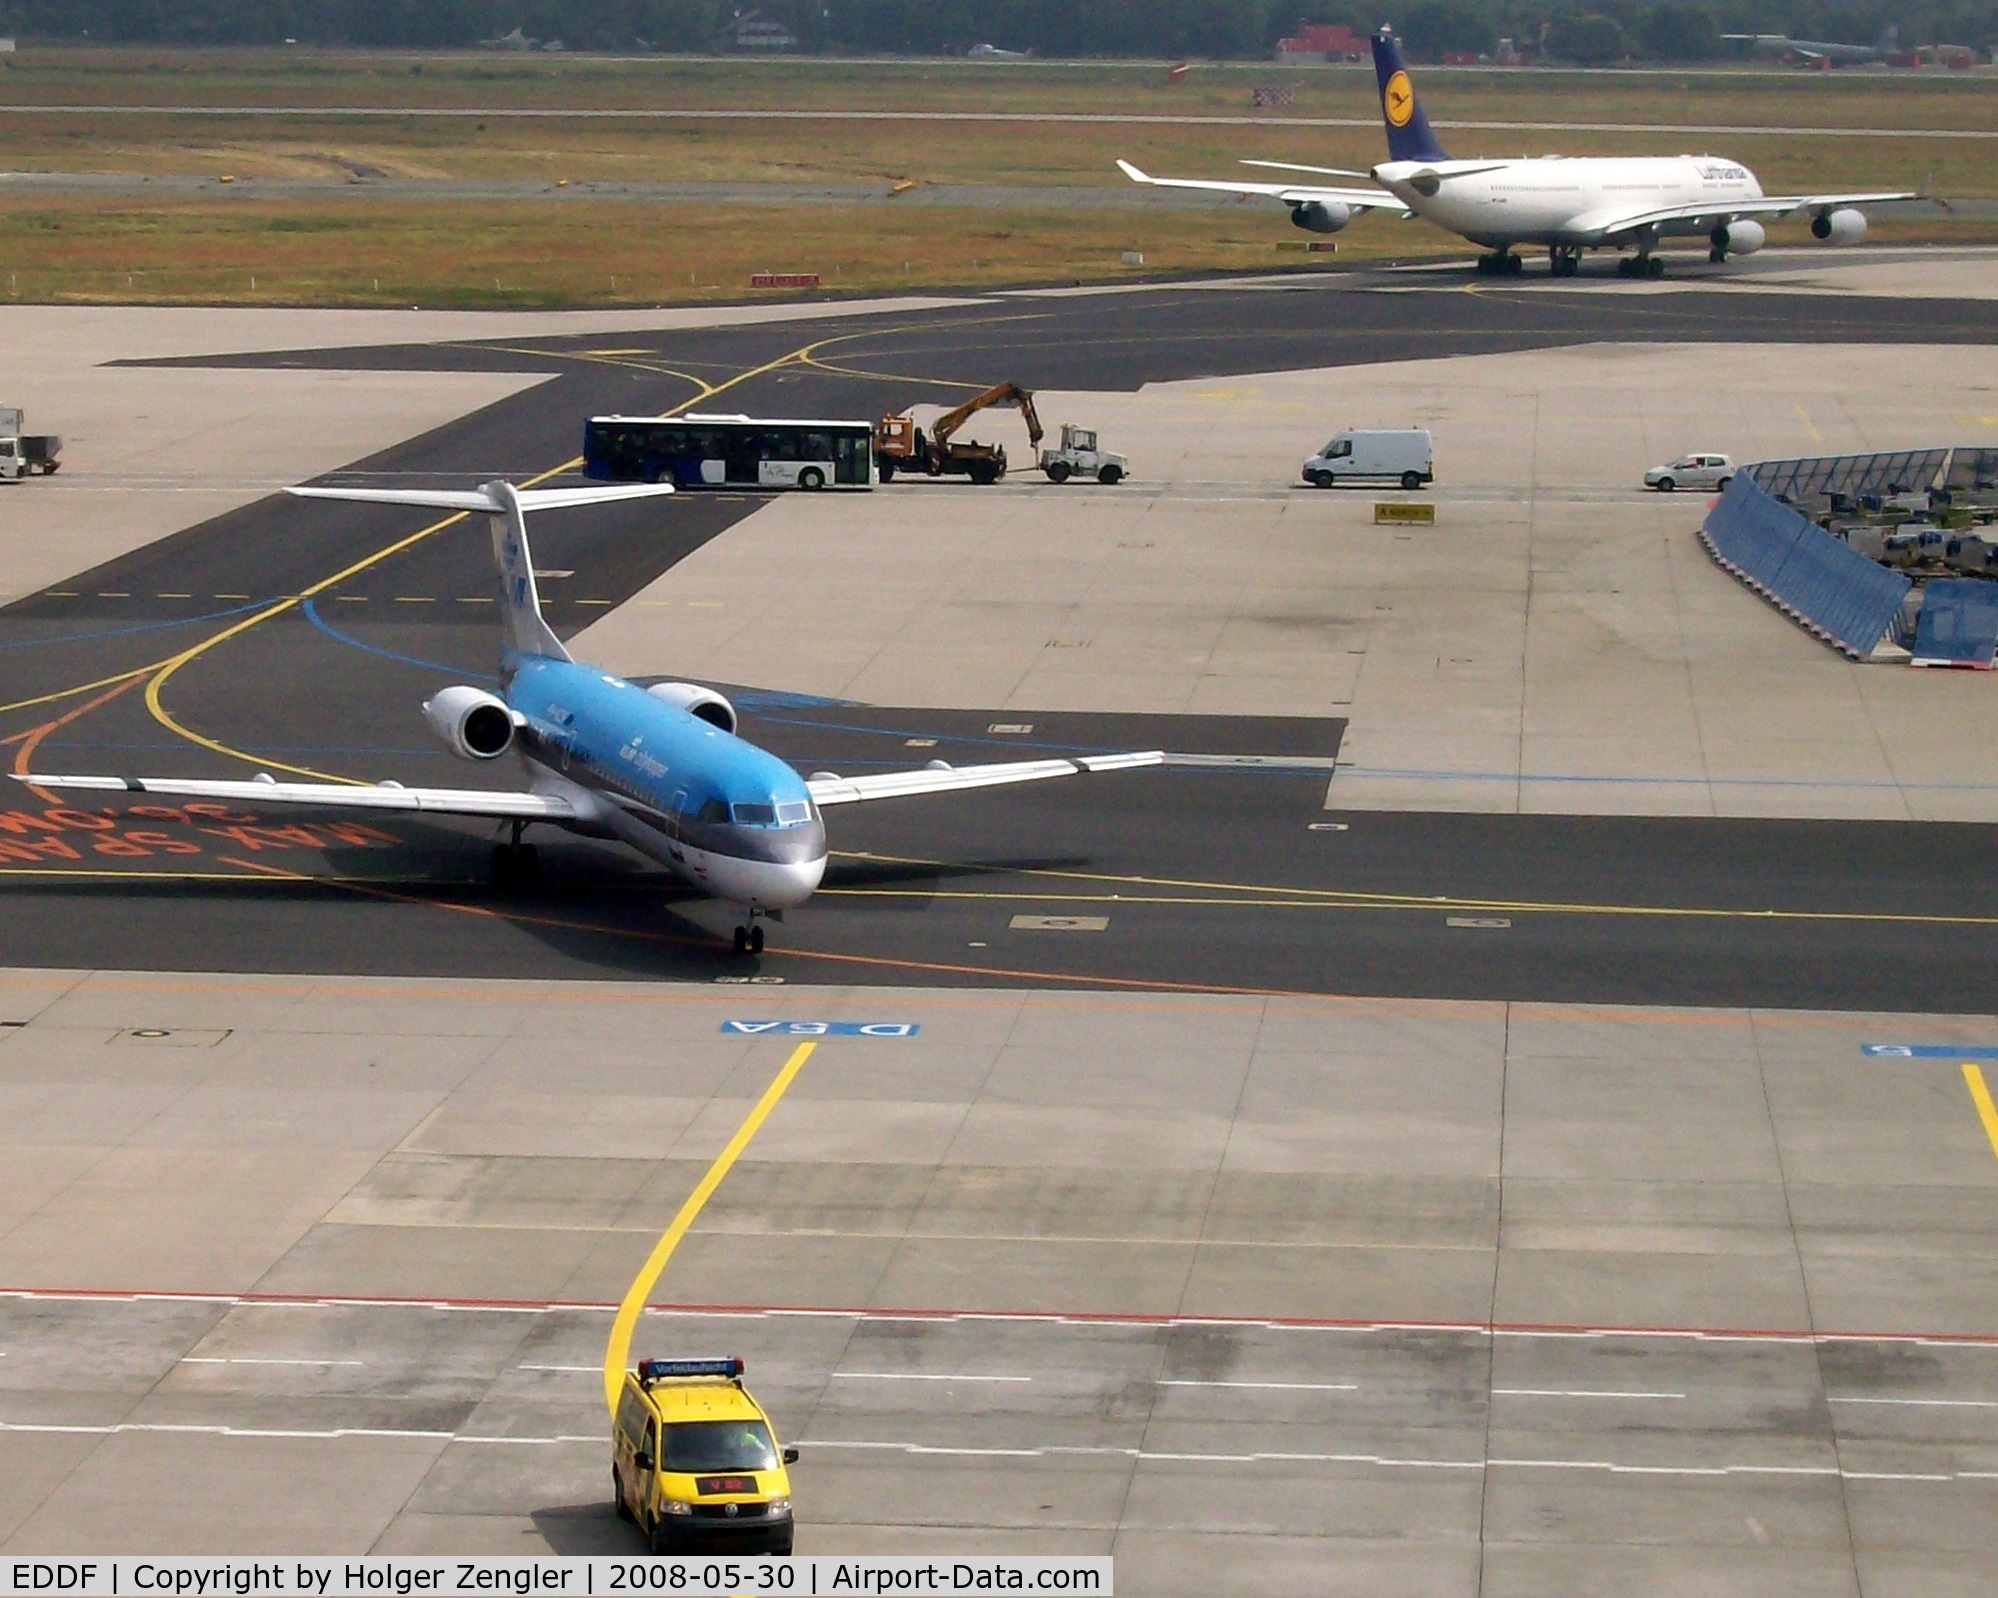 Frankfurt International Airport, Frankfurt am Main Germany (EDDF) - Coming and going at FRA